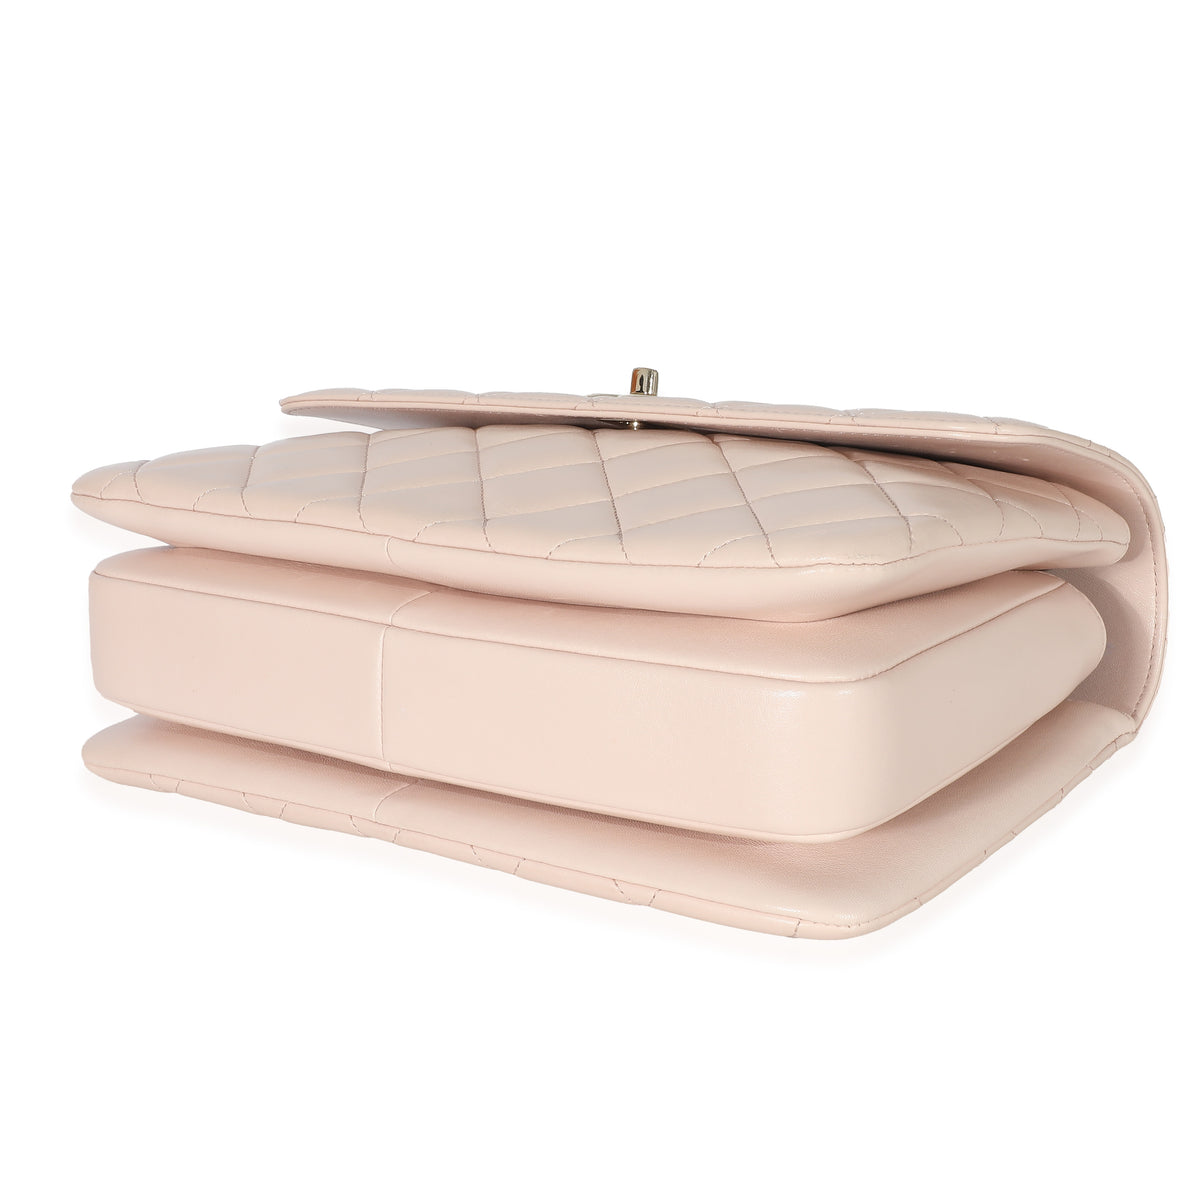 Pink Quilted Lambskin Medium Trendy CC Dual Top Handle Bag